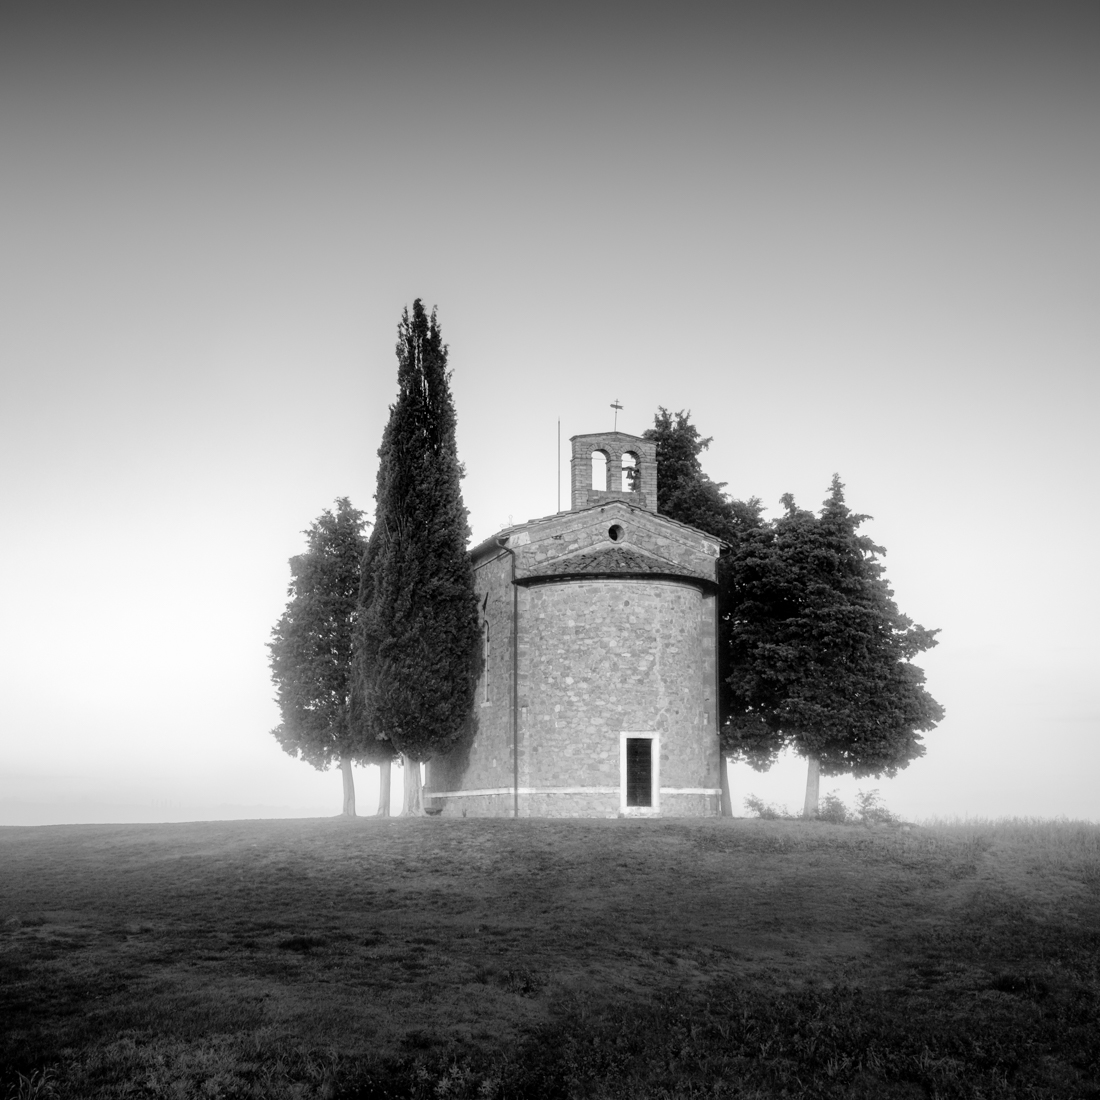 The silence of Tuscany